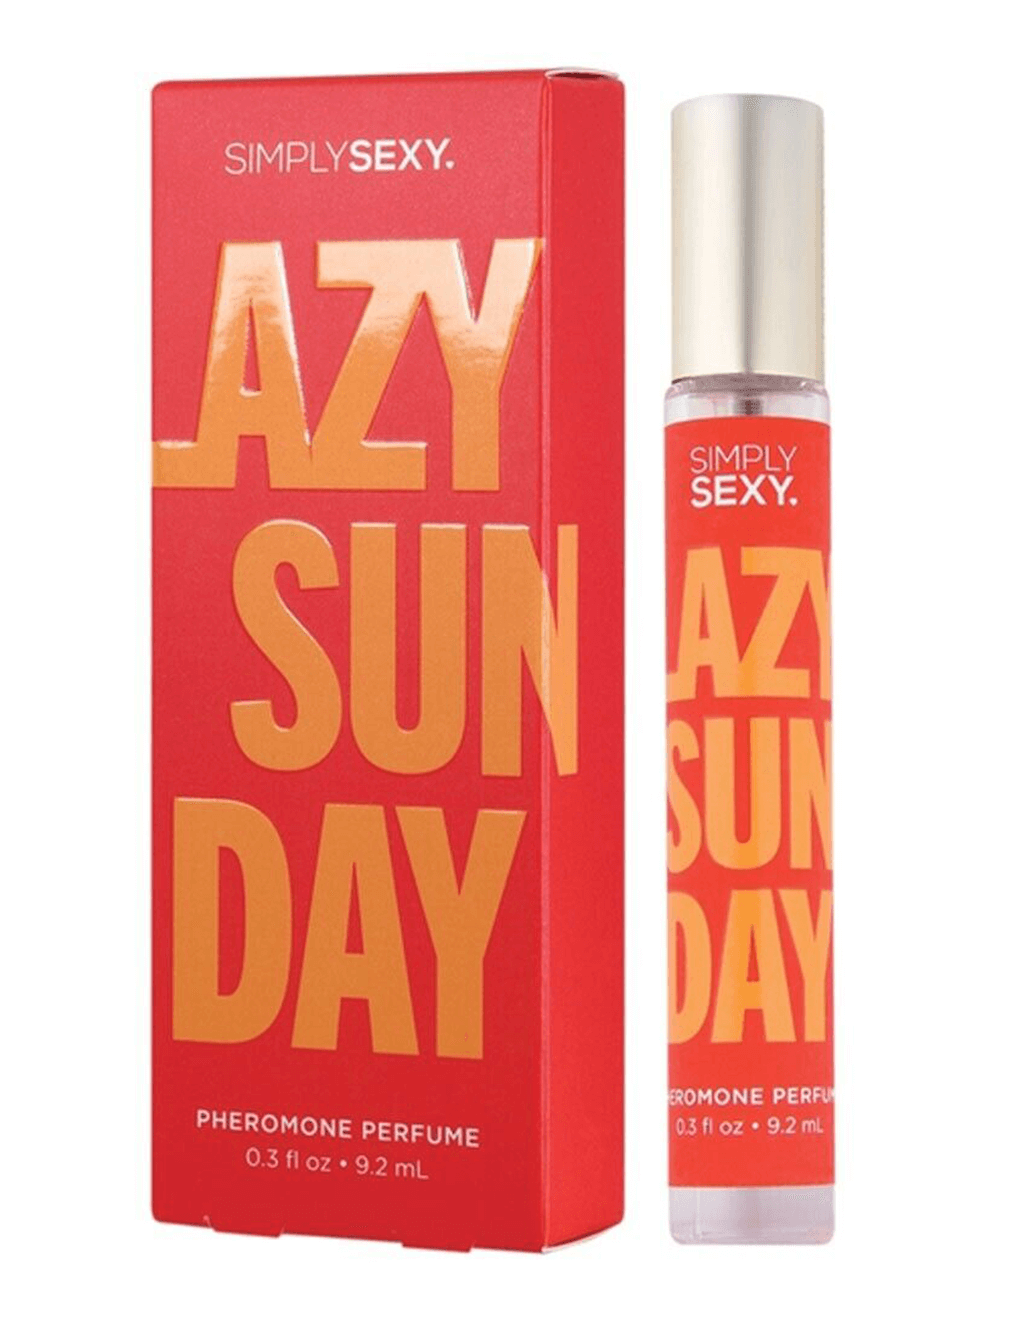 Simply Sexy Lazy Sunday Pheromone Perfume - Product With Box